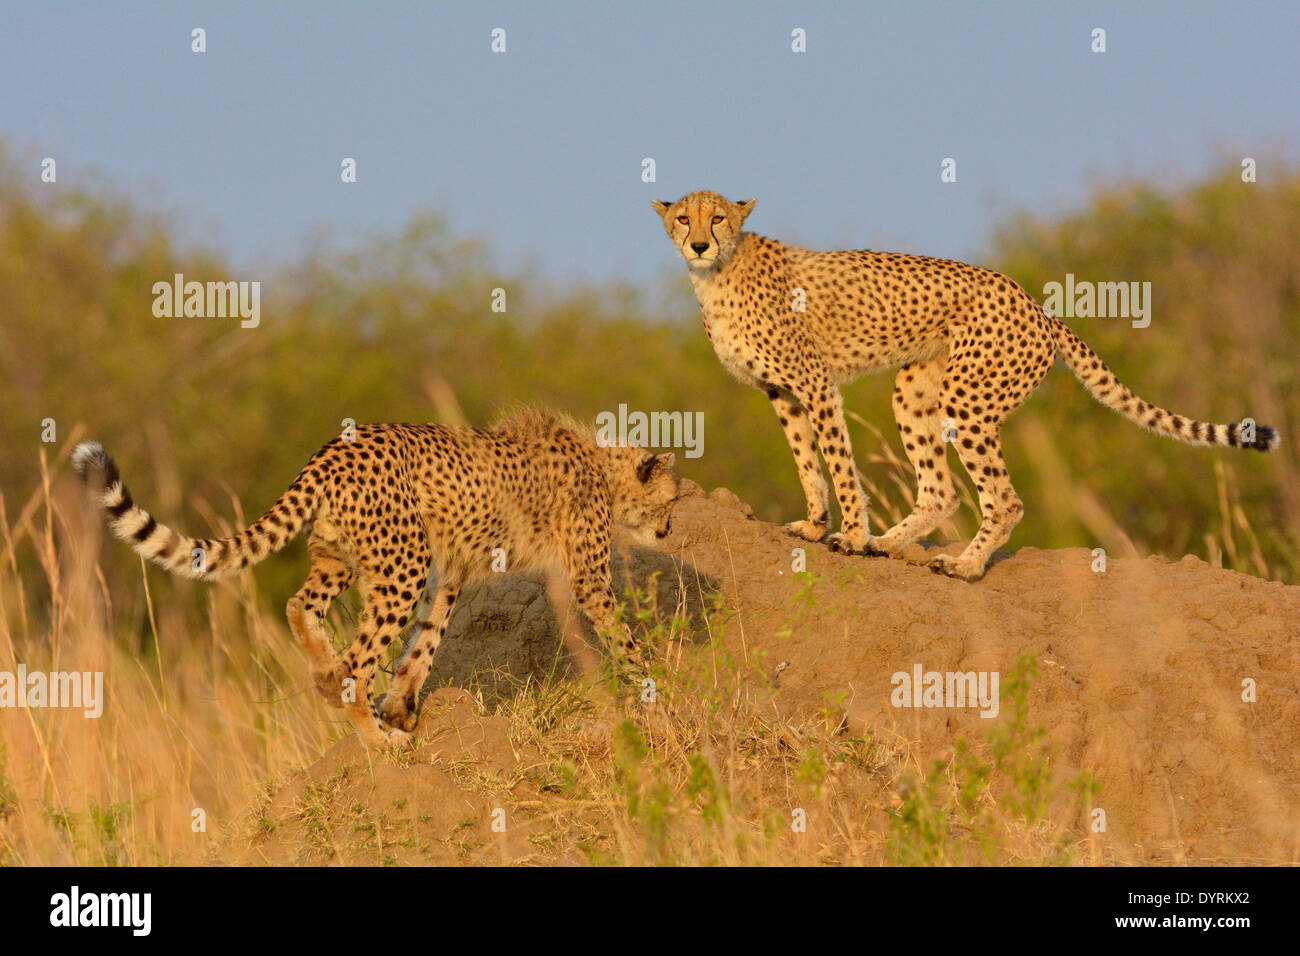 Two Cheetahs in the grasslands of Masai Mara in Kenya, Africa Stock Photo